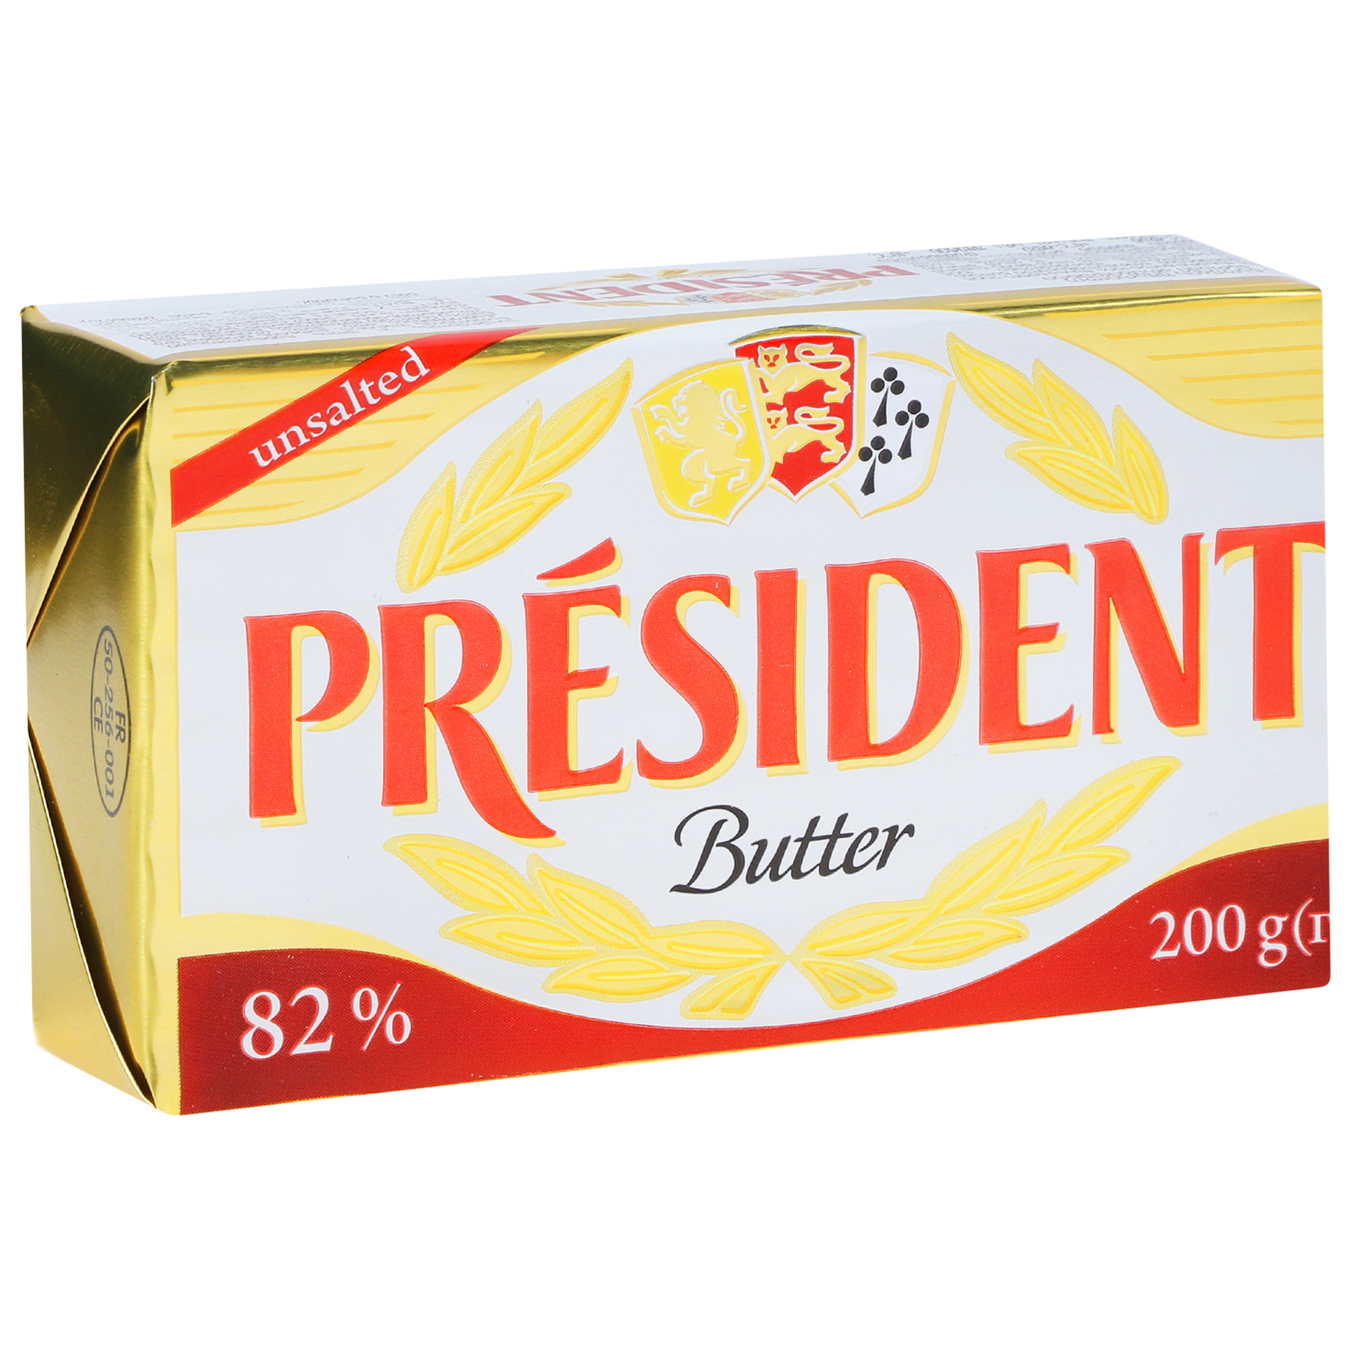 President Unsalted Sour Cream Butter 82% 200g 2